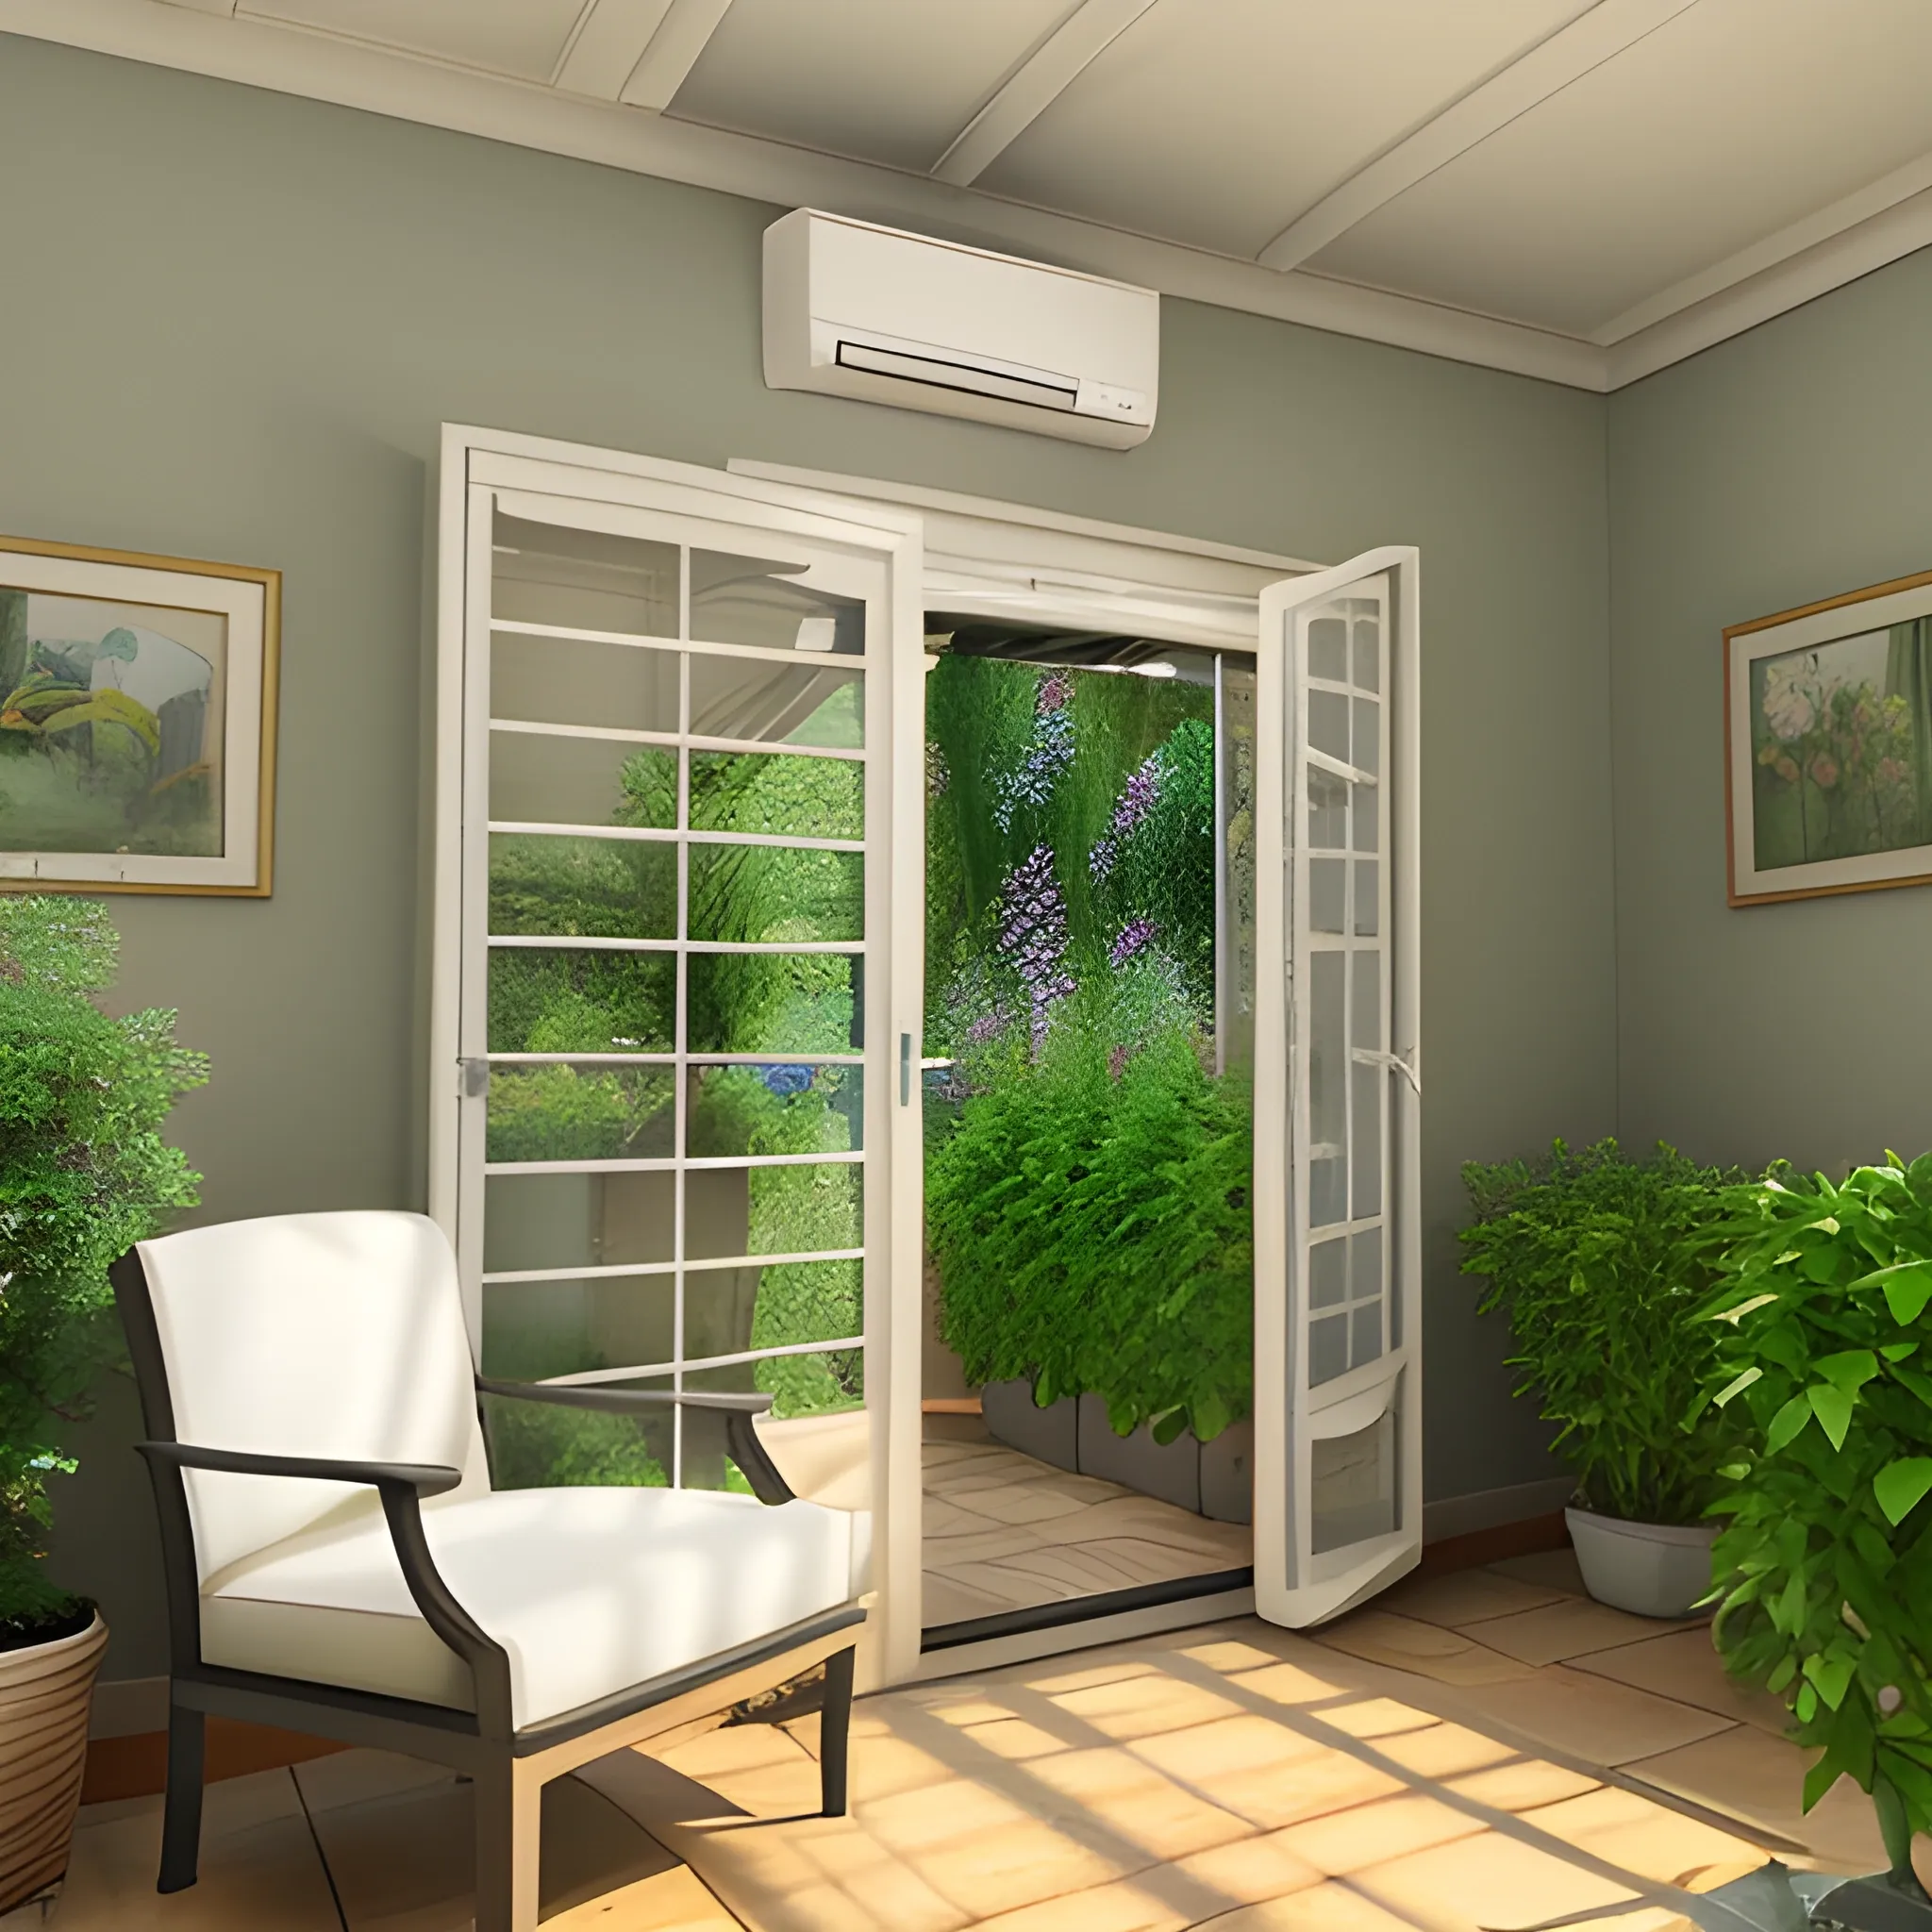 garden room interior, air conditioning unit on wall, garden view, 3D